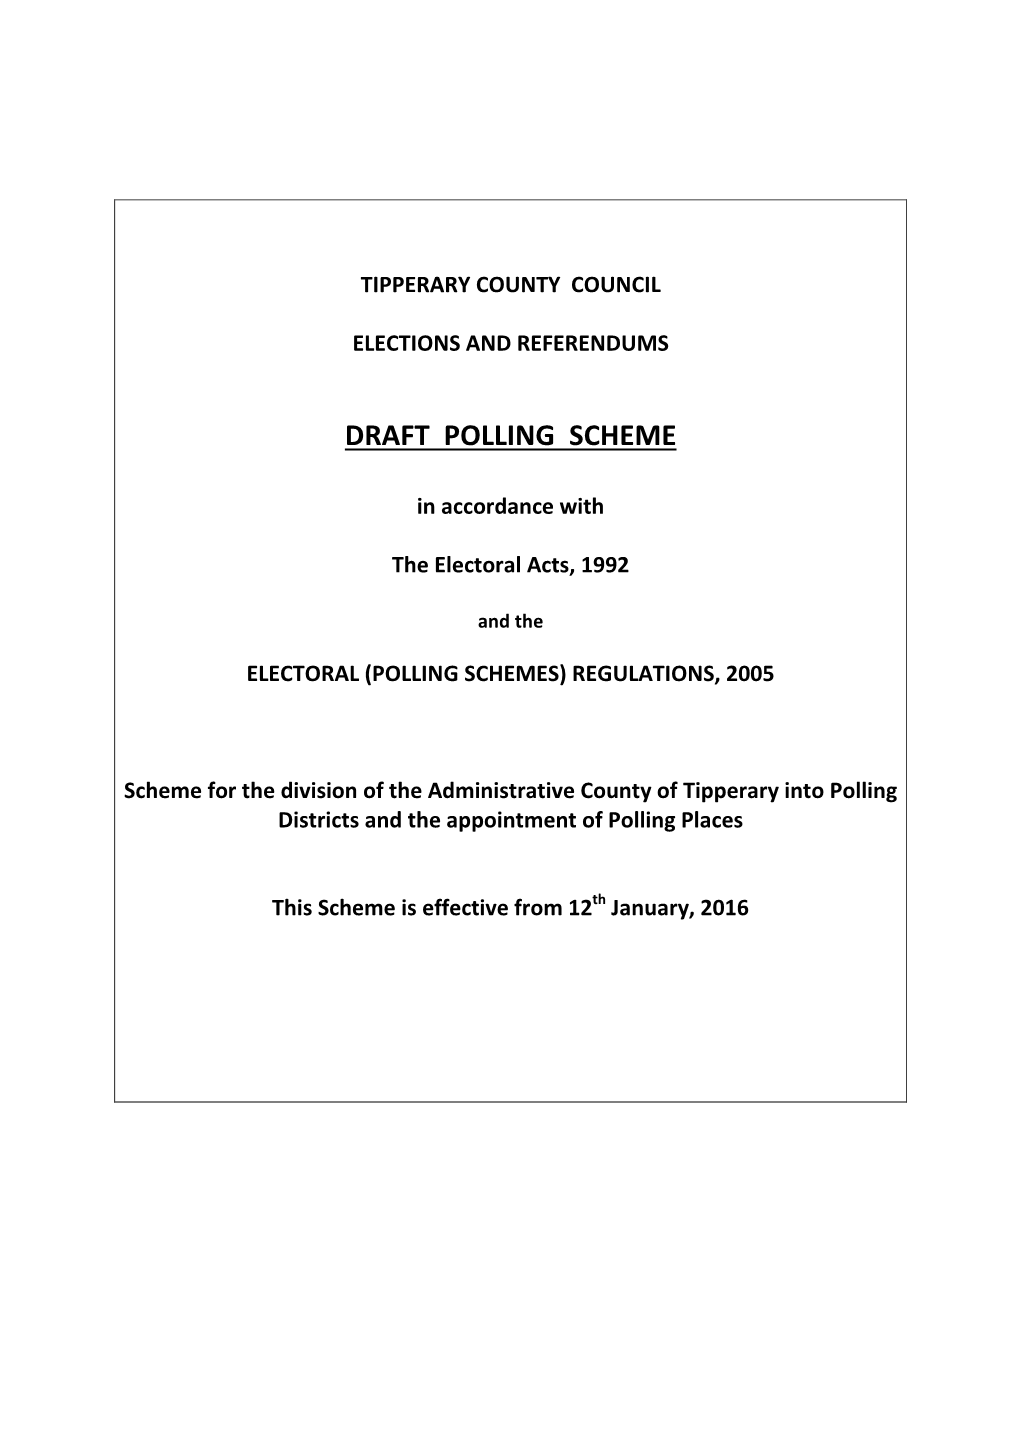 Draft Polling Scheme